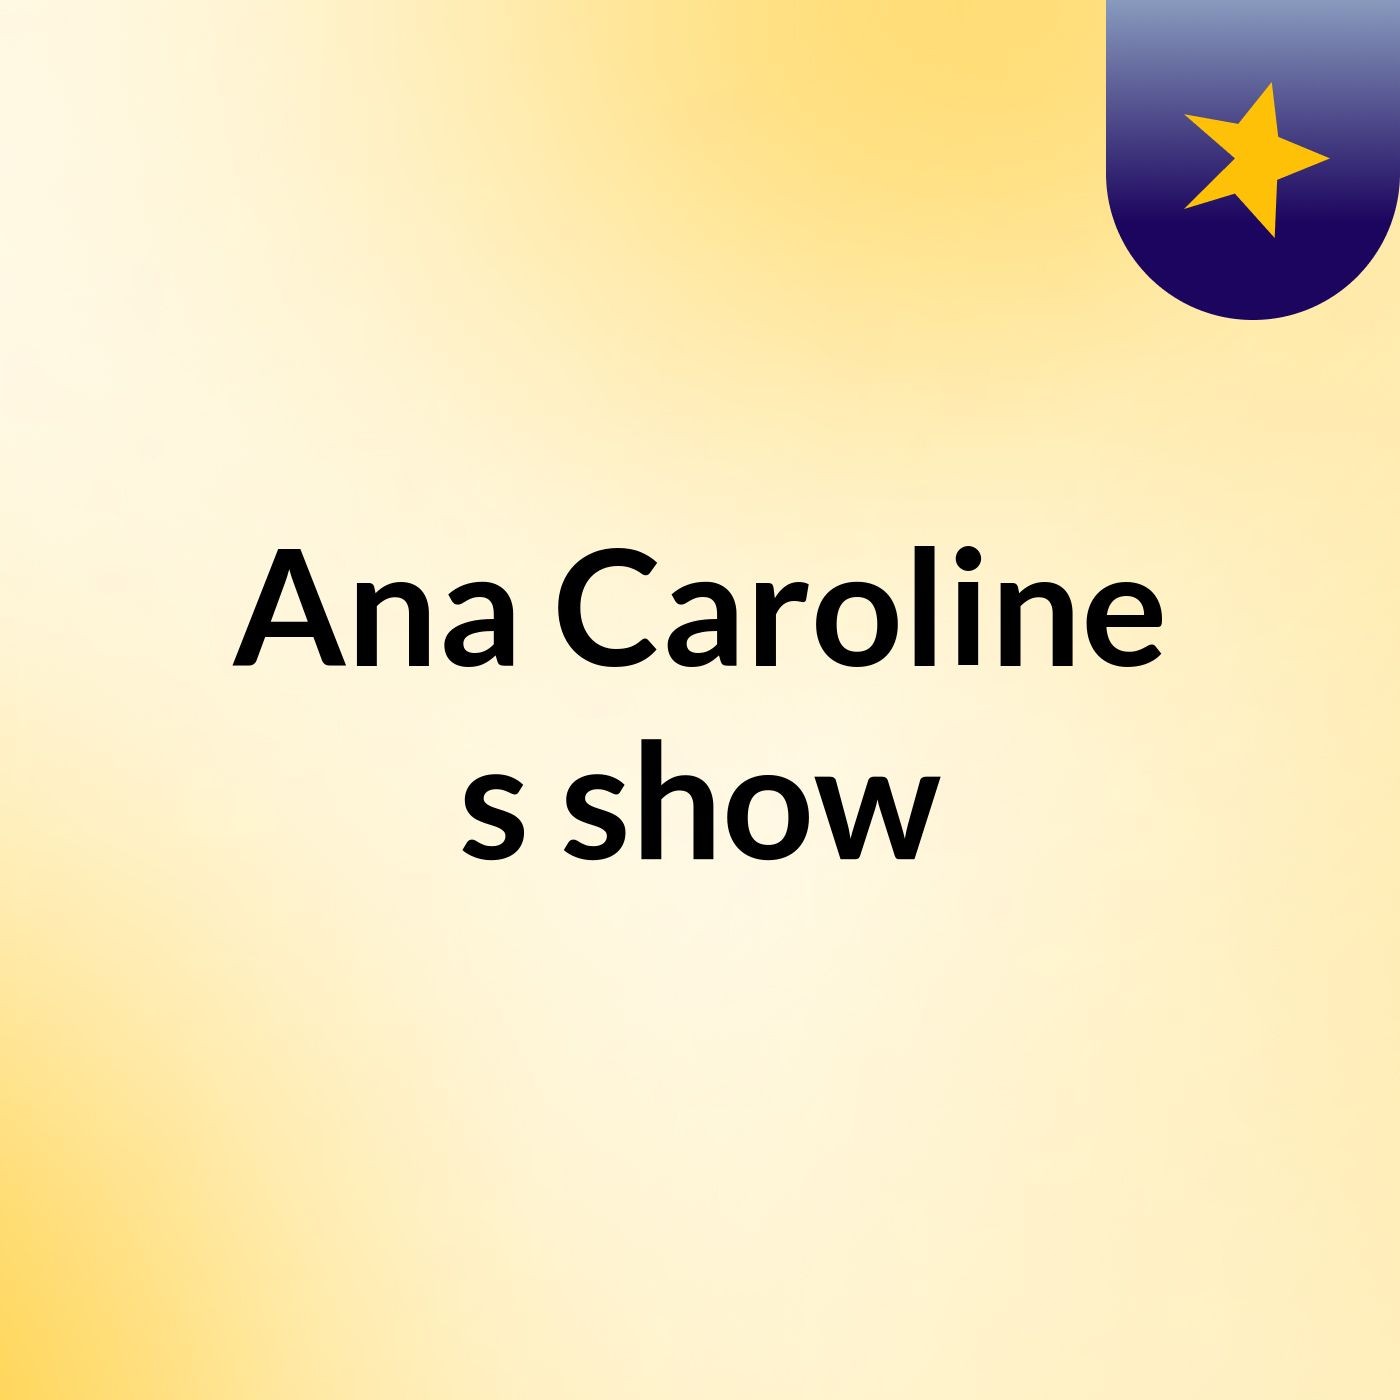 Ana Caroline's show